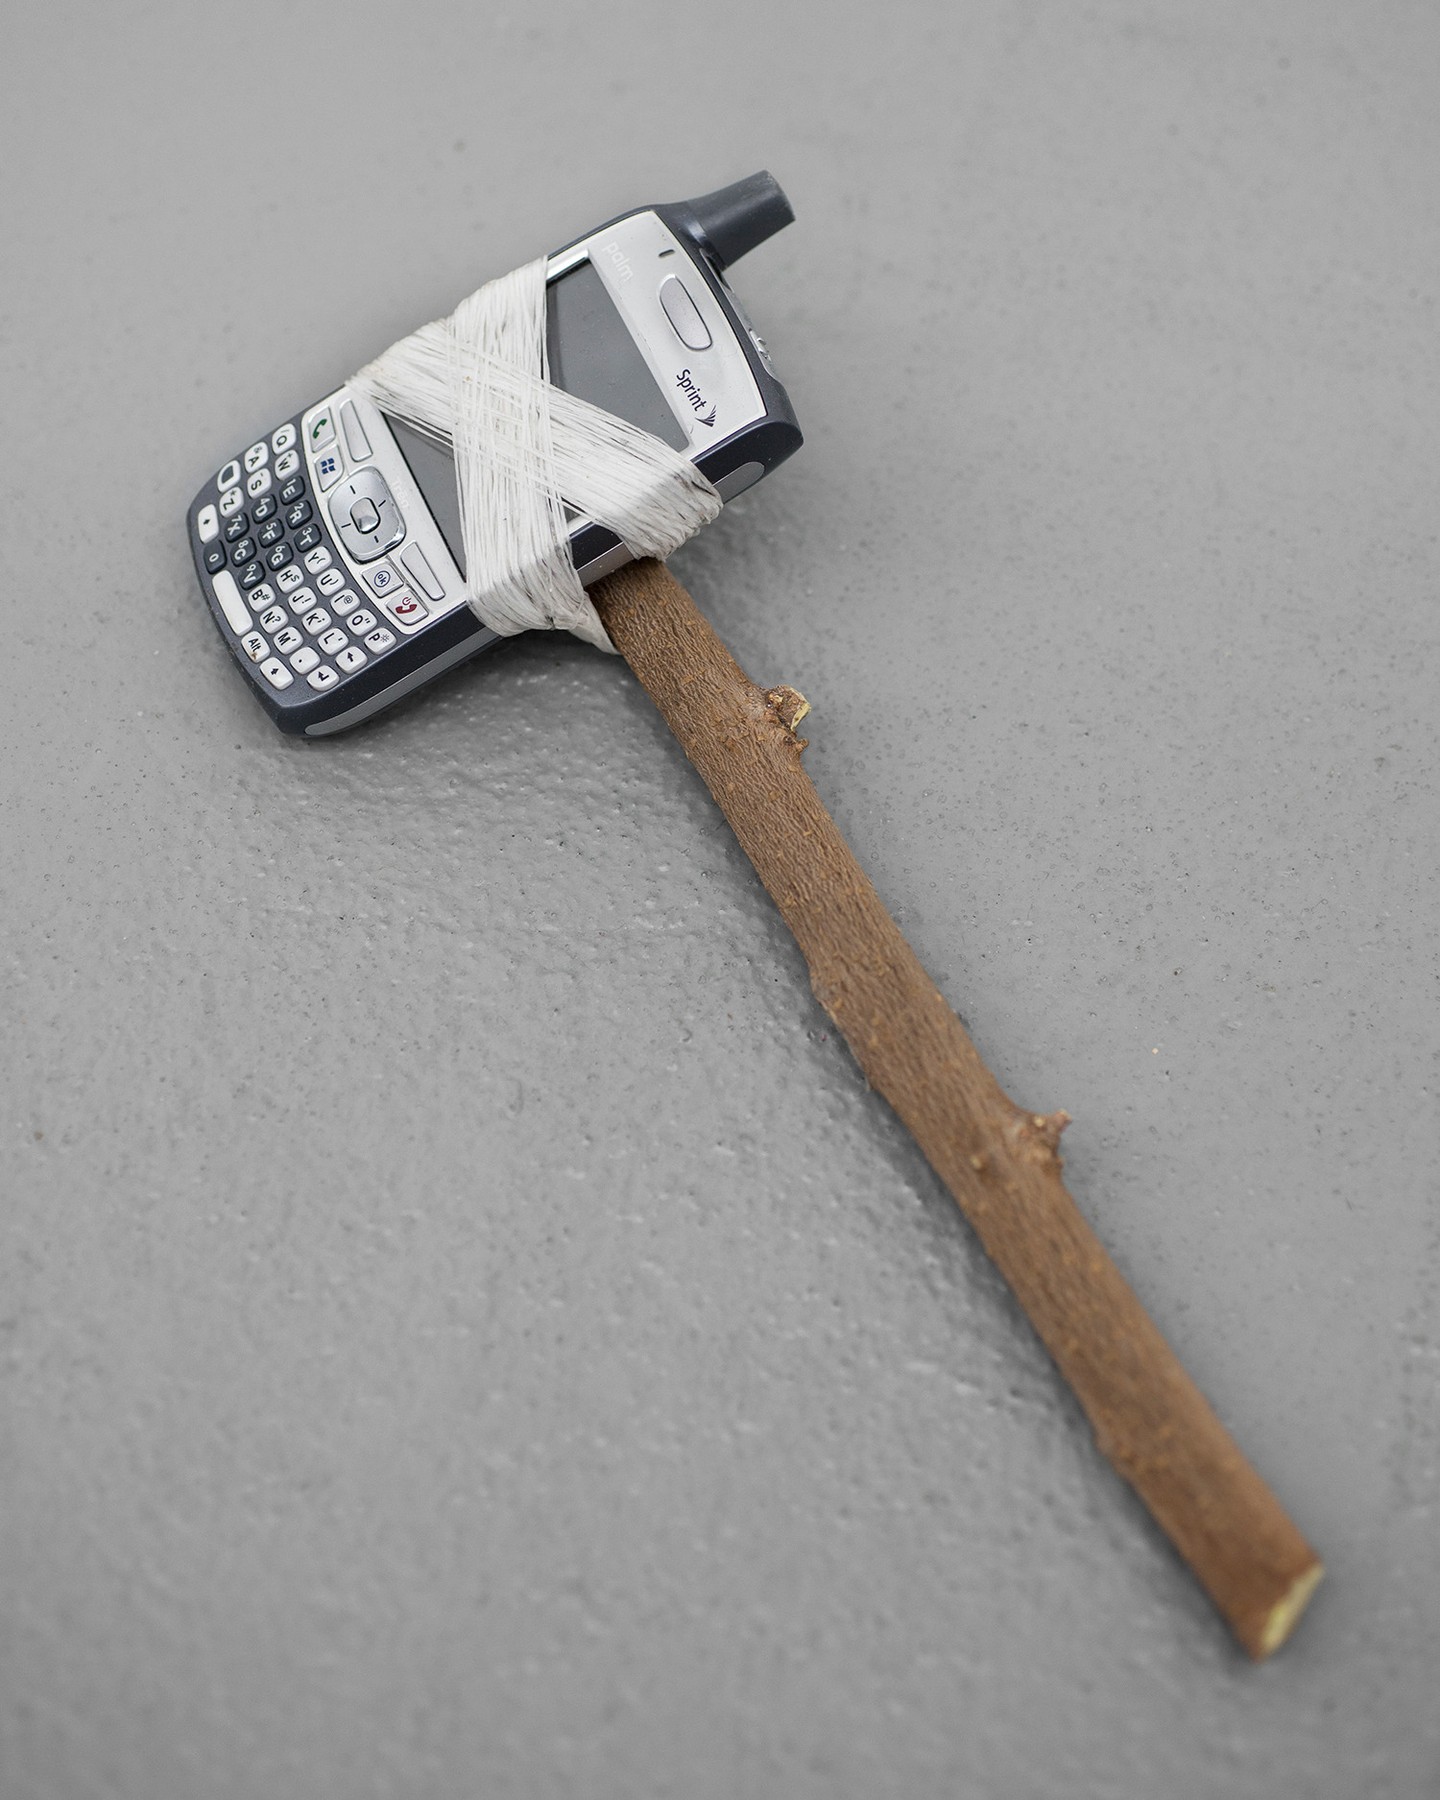 Bea Fremderman, Weapon No. 1 (cellphone), 2017.